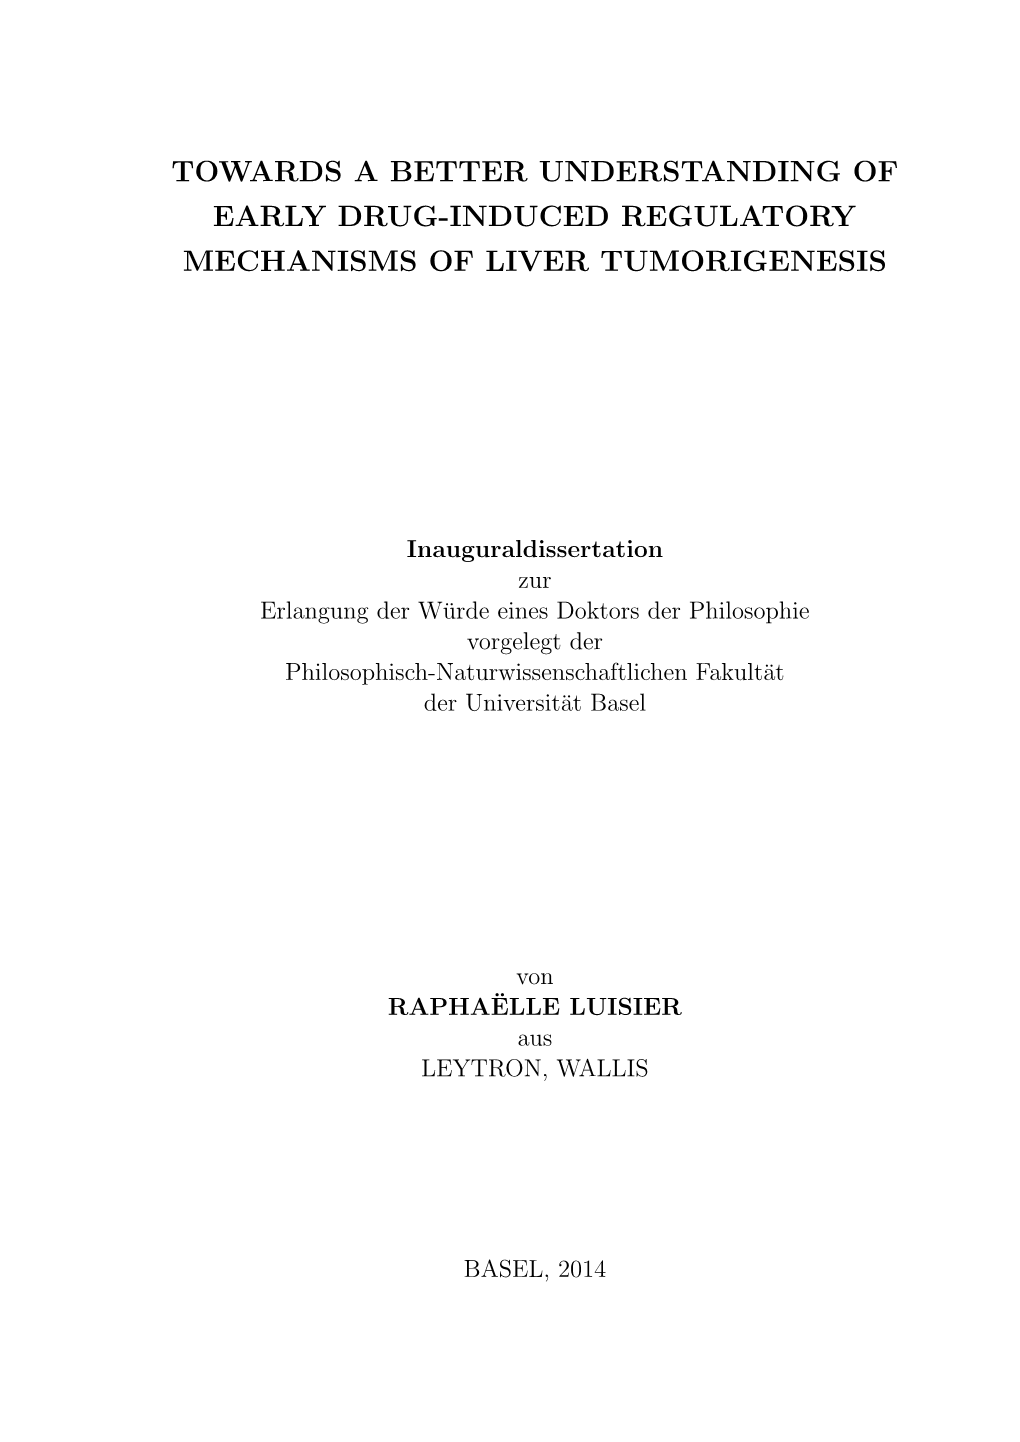 Towards a Better Understanding of Early Drug-Induced Regulatory Mechanisms of Liver Tumorigenesis